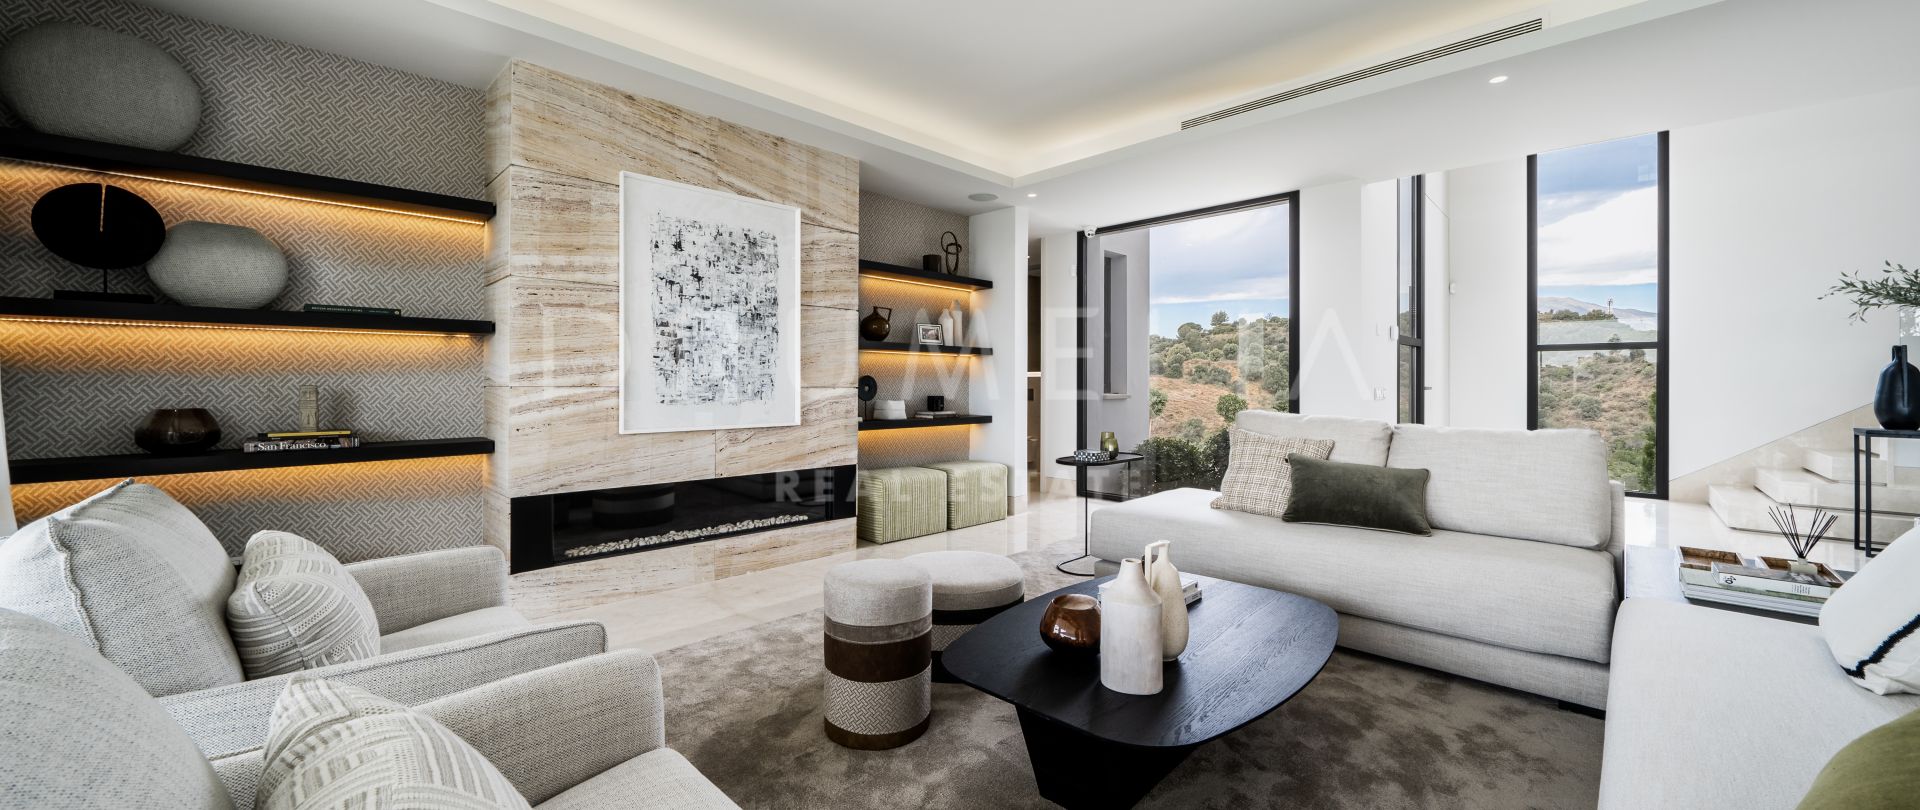 Brand-new modern villa in Lomas del Virrey, the Golden Mile of Marbella